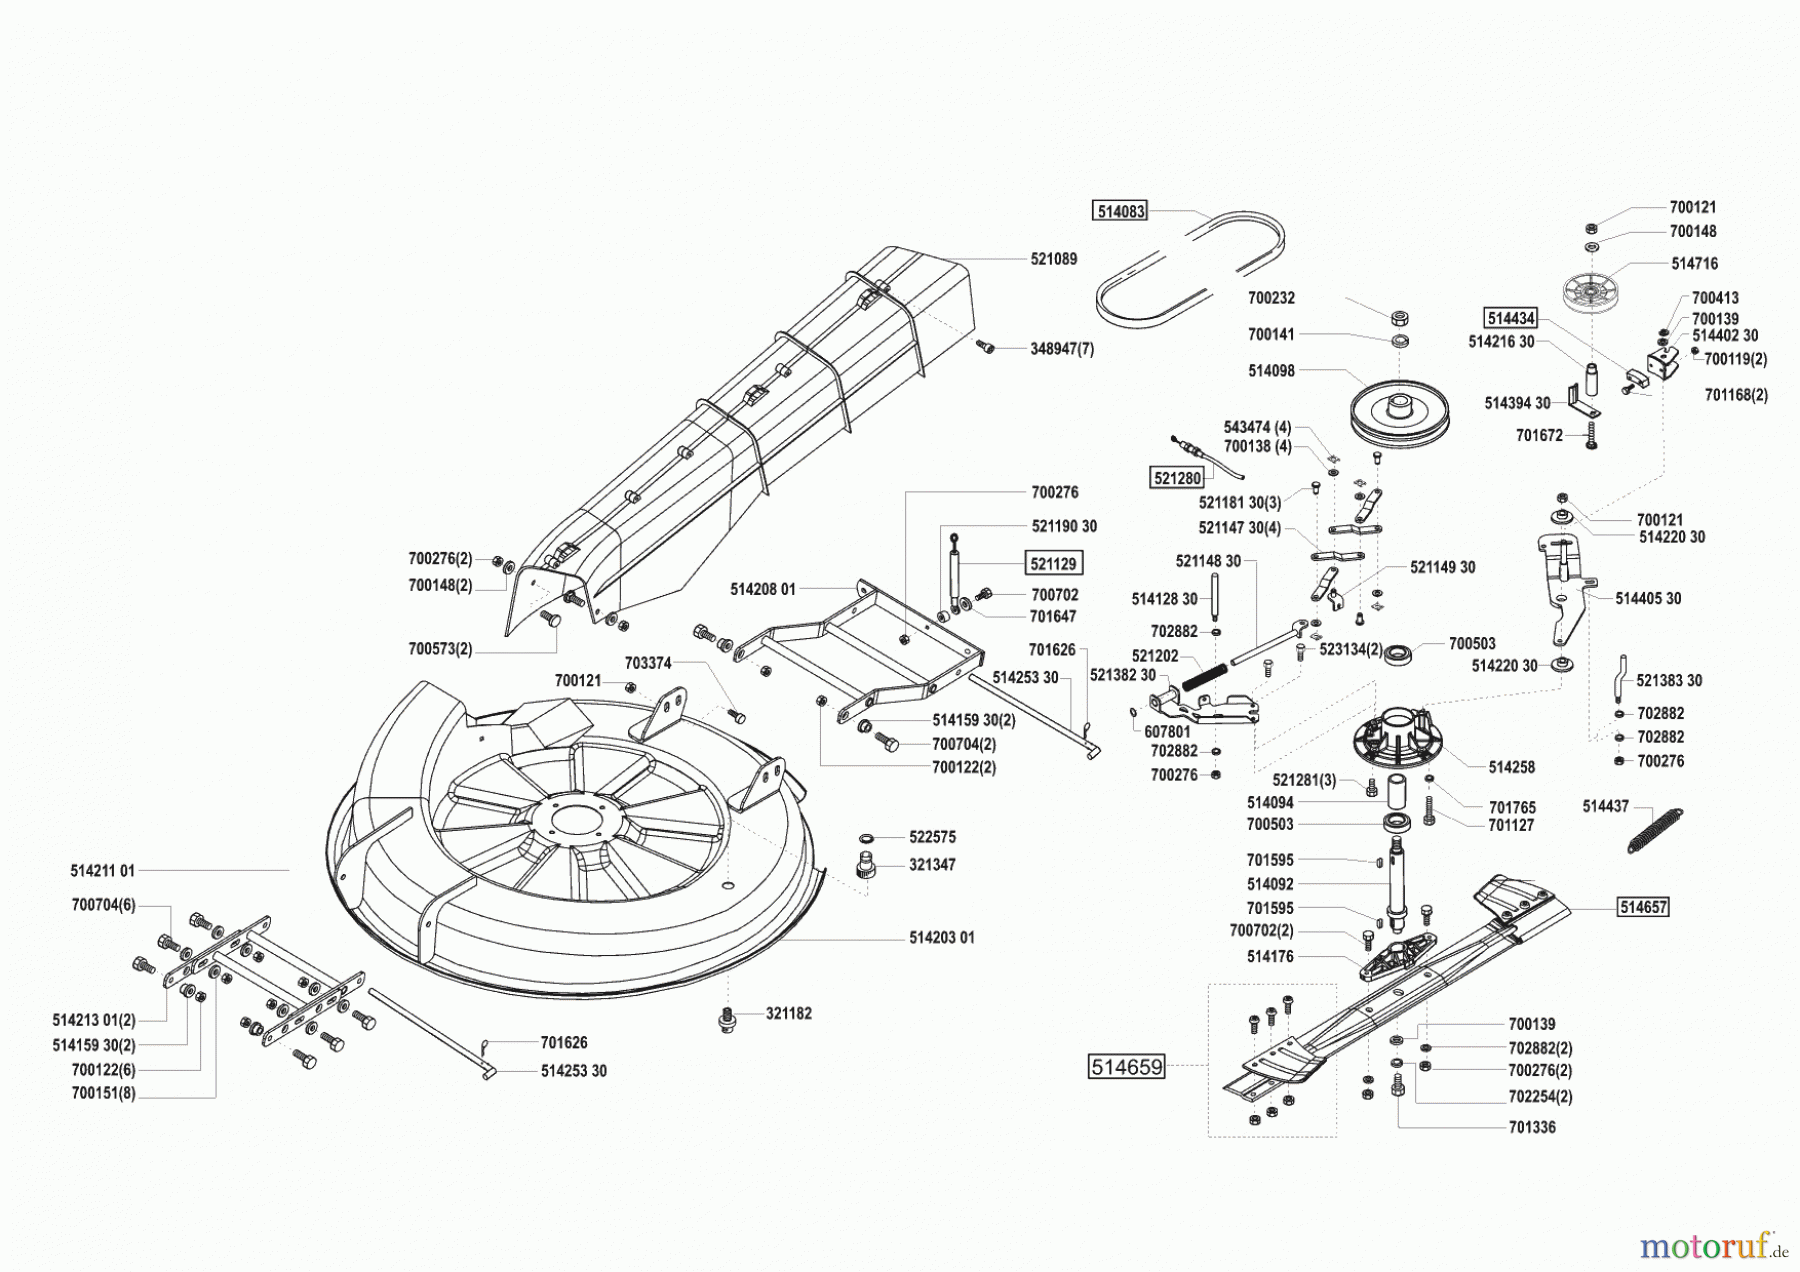  AL-KO Gartentechnik Rasentraktor T-800 ab 02/2002 Seite 5